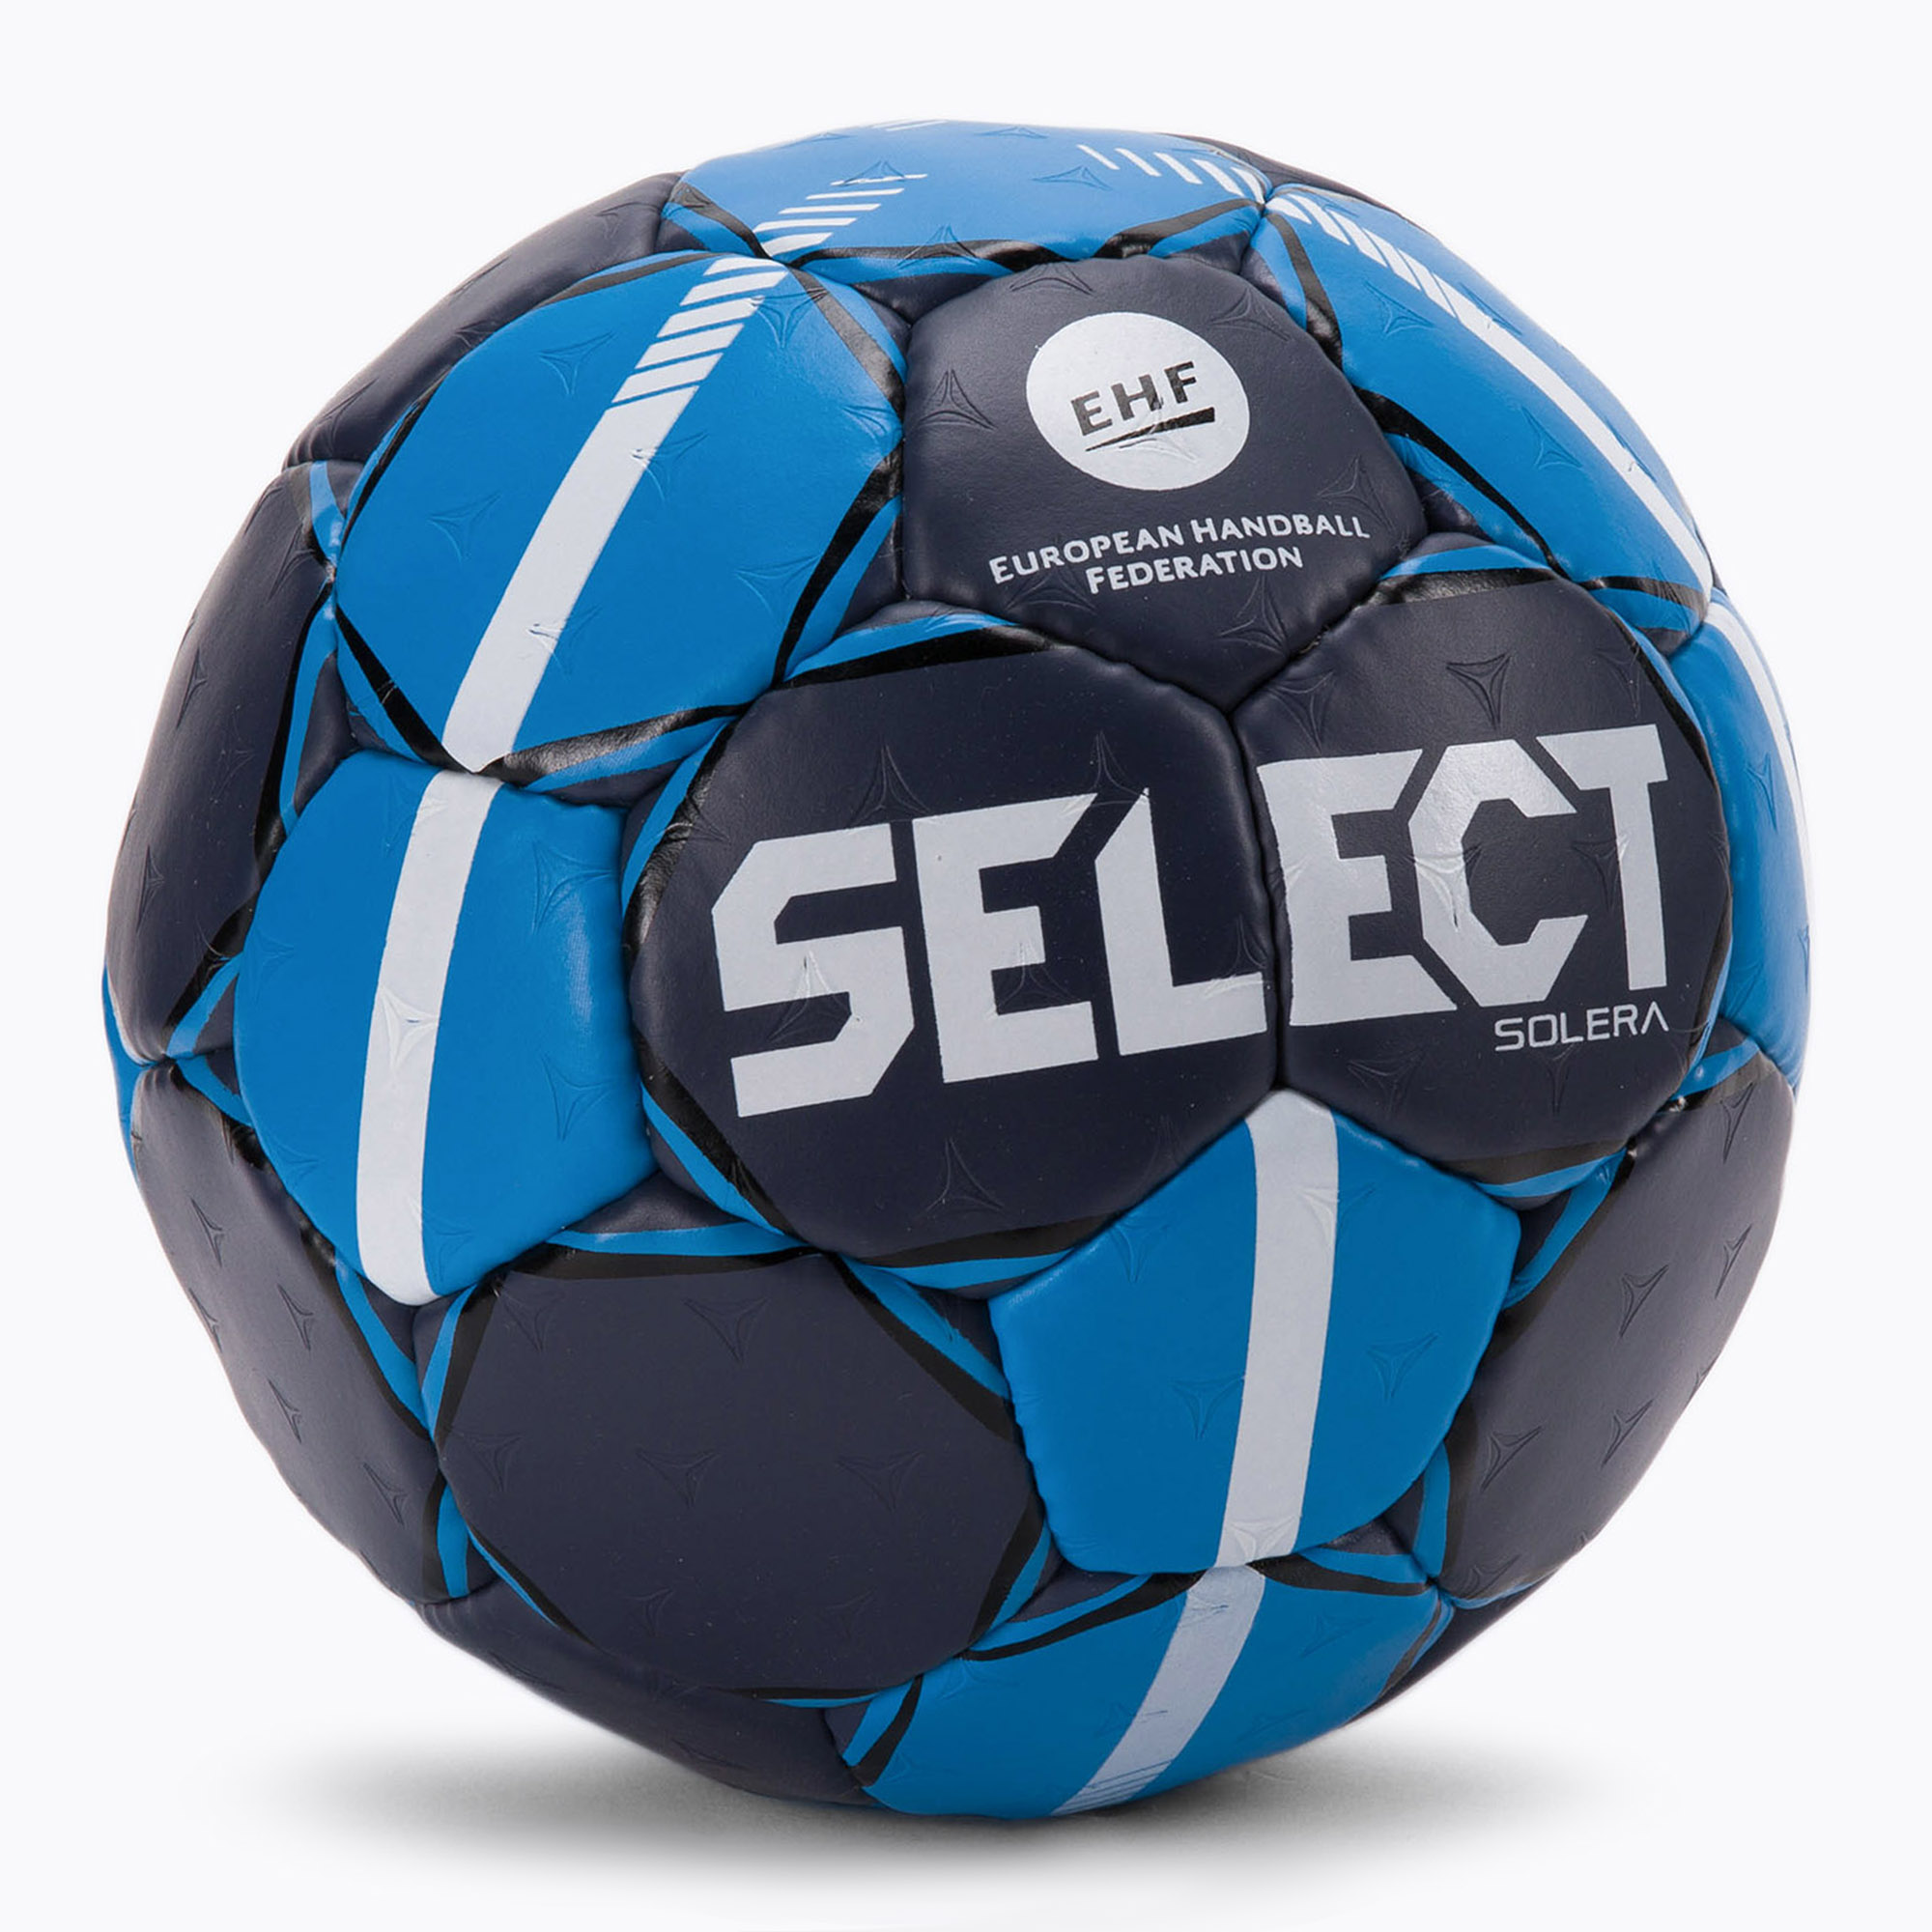 SELECT Solera handball 2019 EHF 1632858992 veľkosť 3